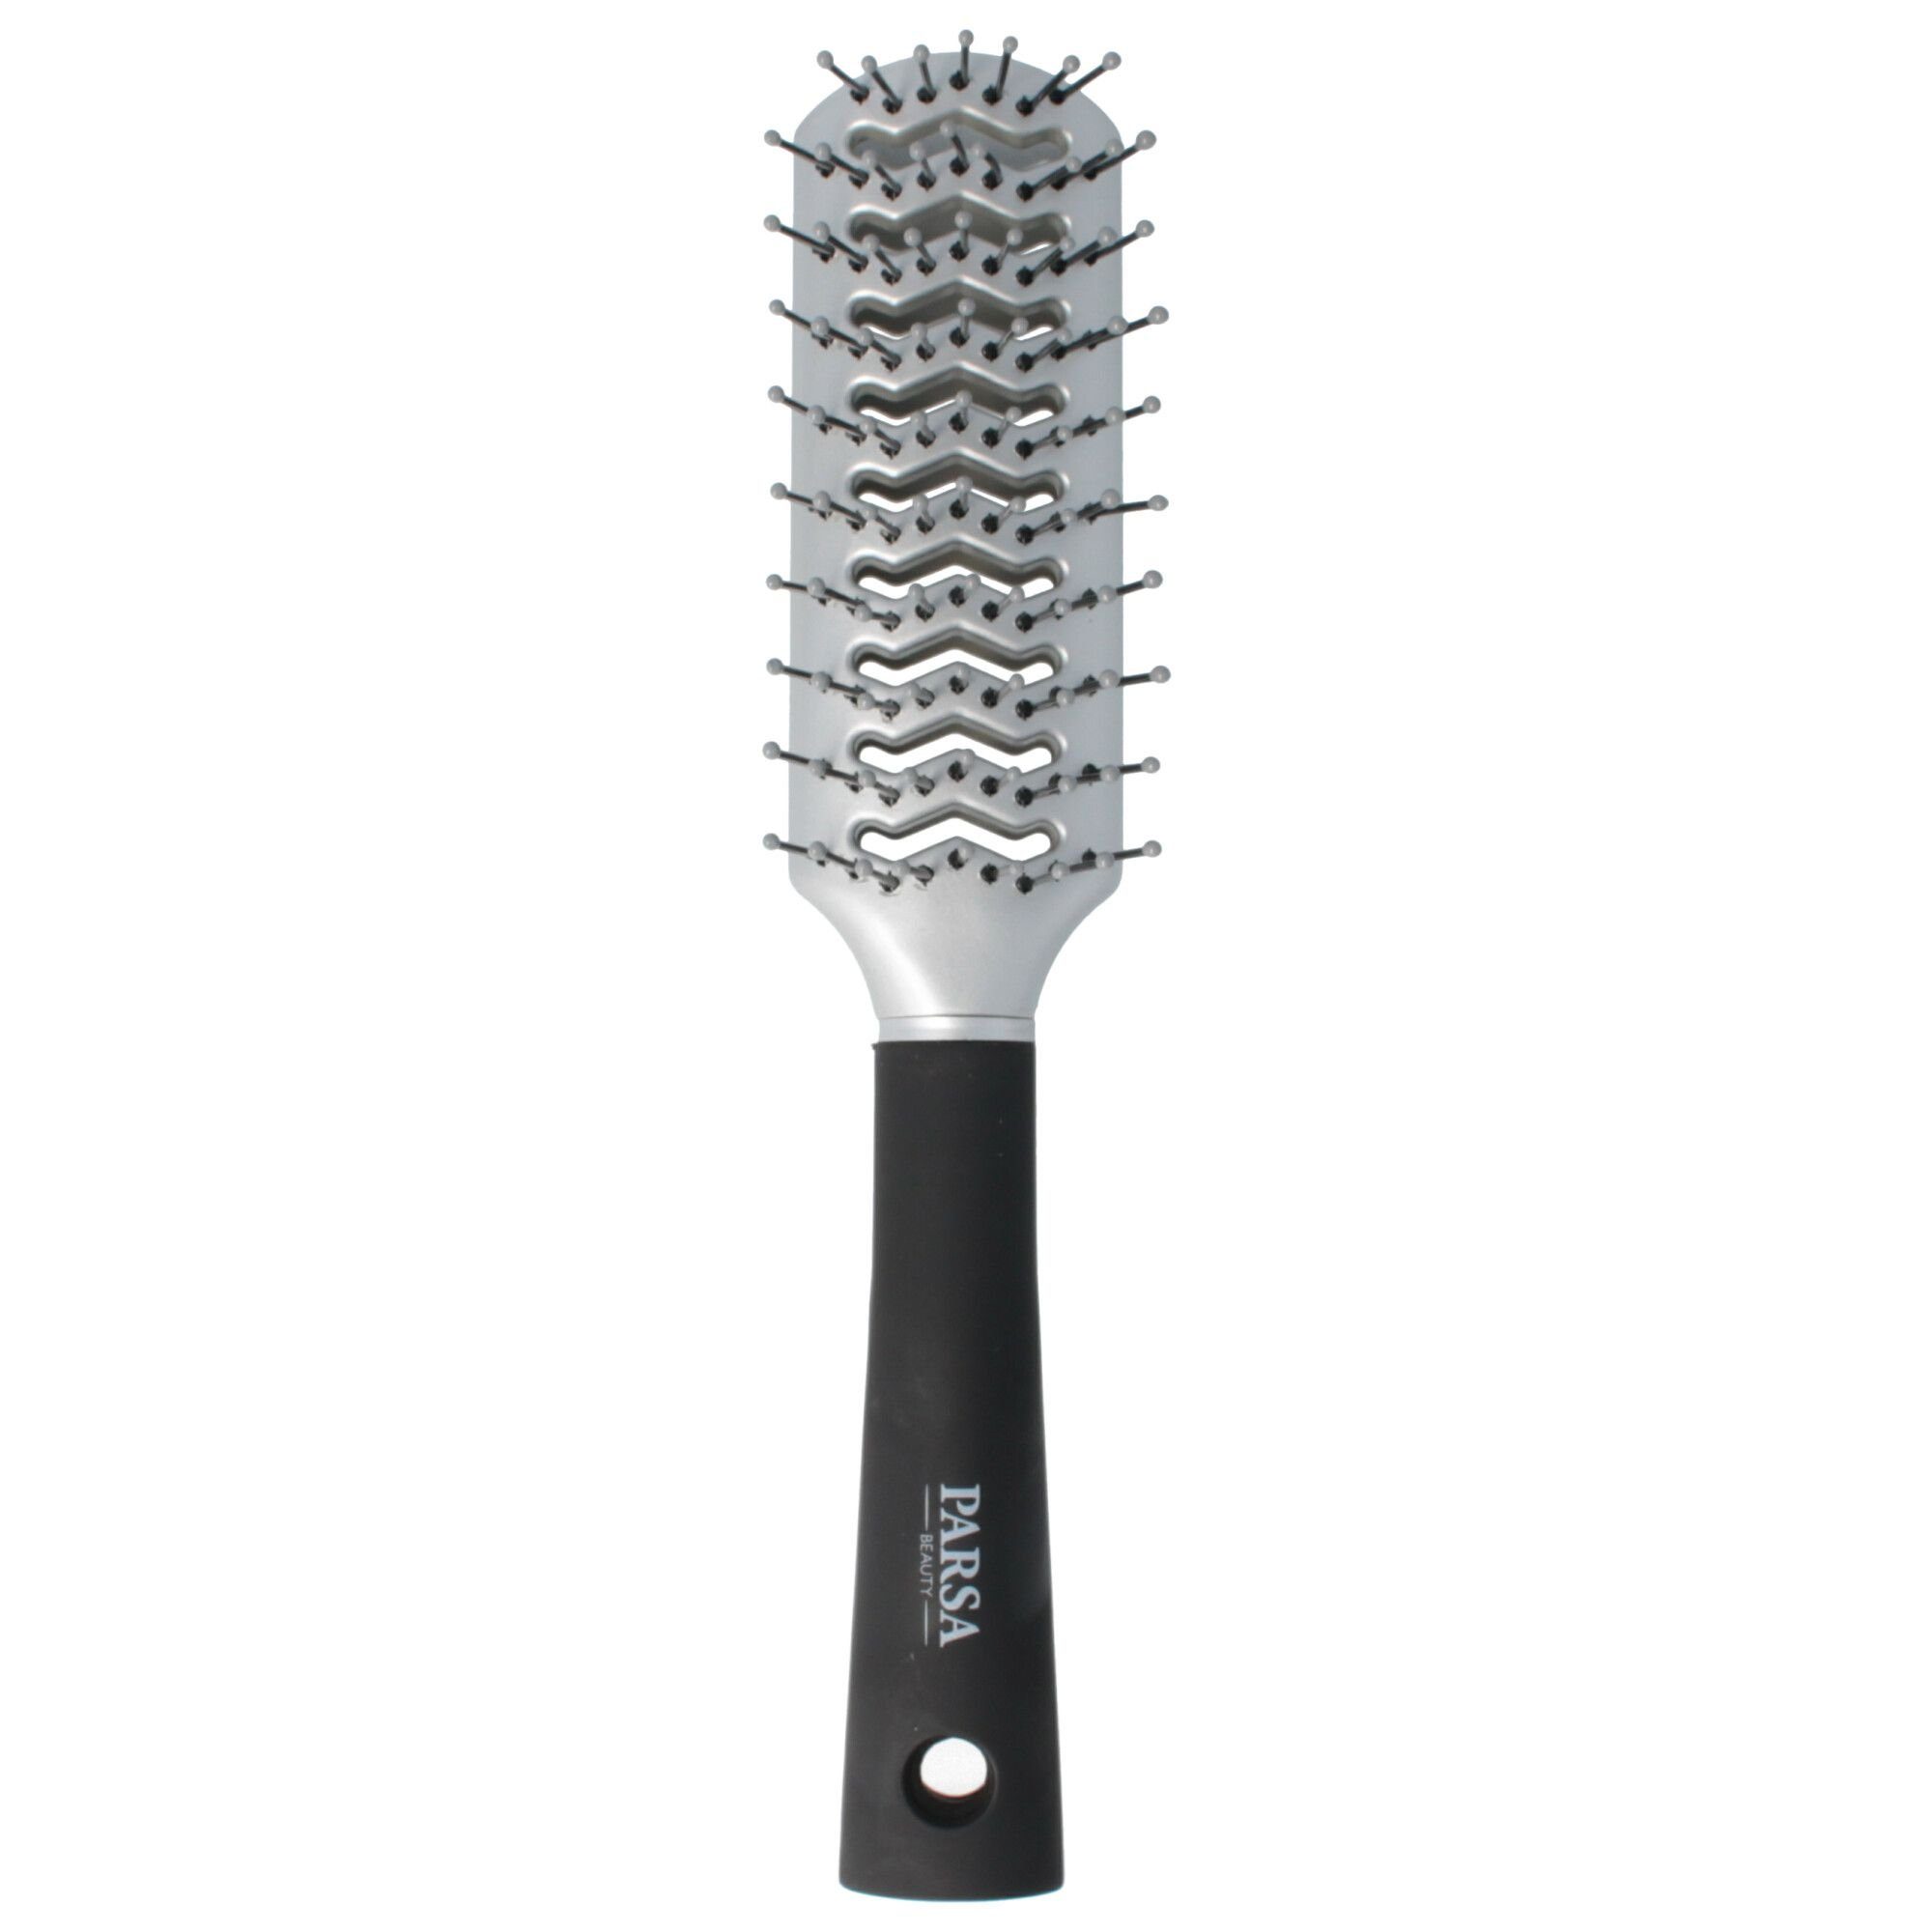 PARSA Beauty Haarbürste Haarbürste Trend mit Line silber Kunststoffpins Föhnbürste